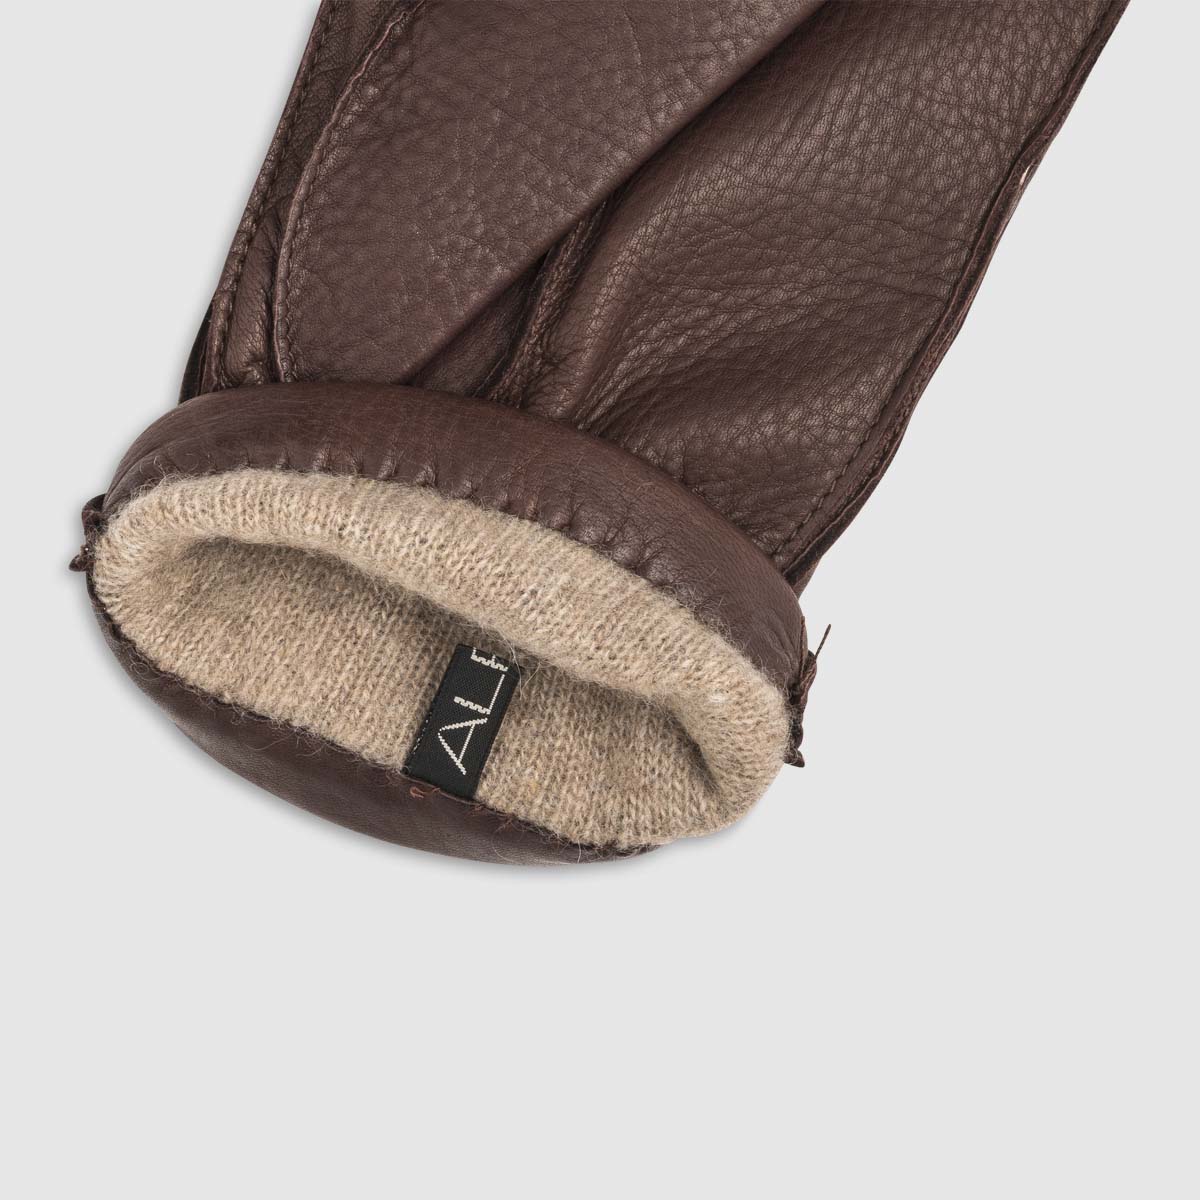 Leather Glove in Tan Alpo Guanti on sale 2022 2